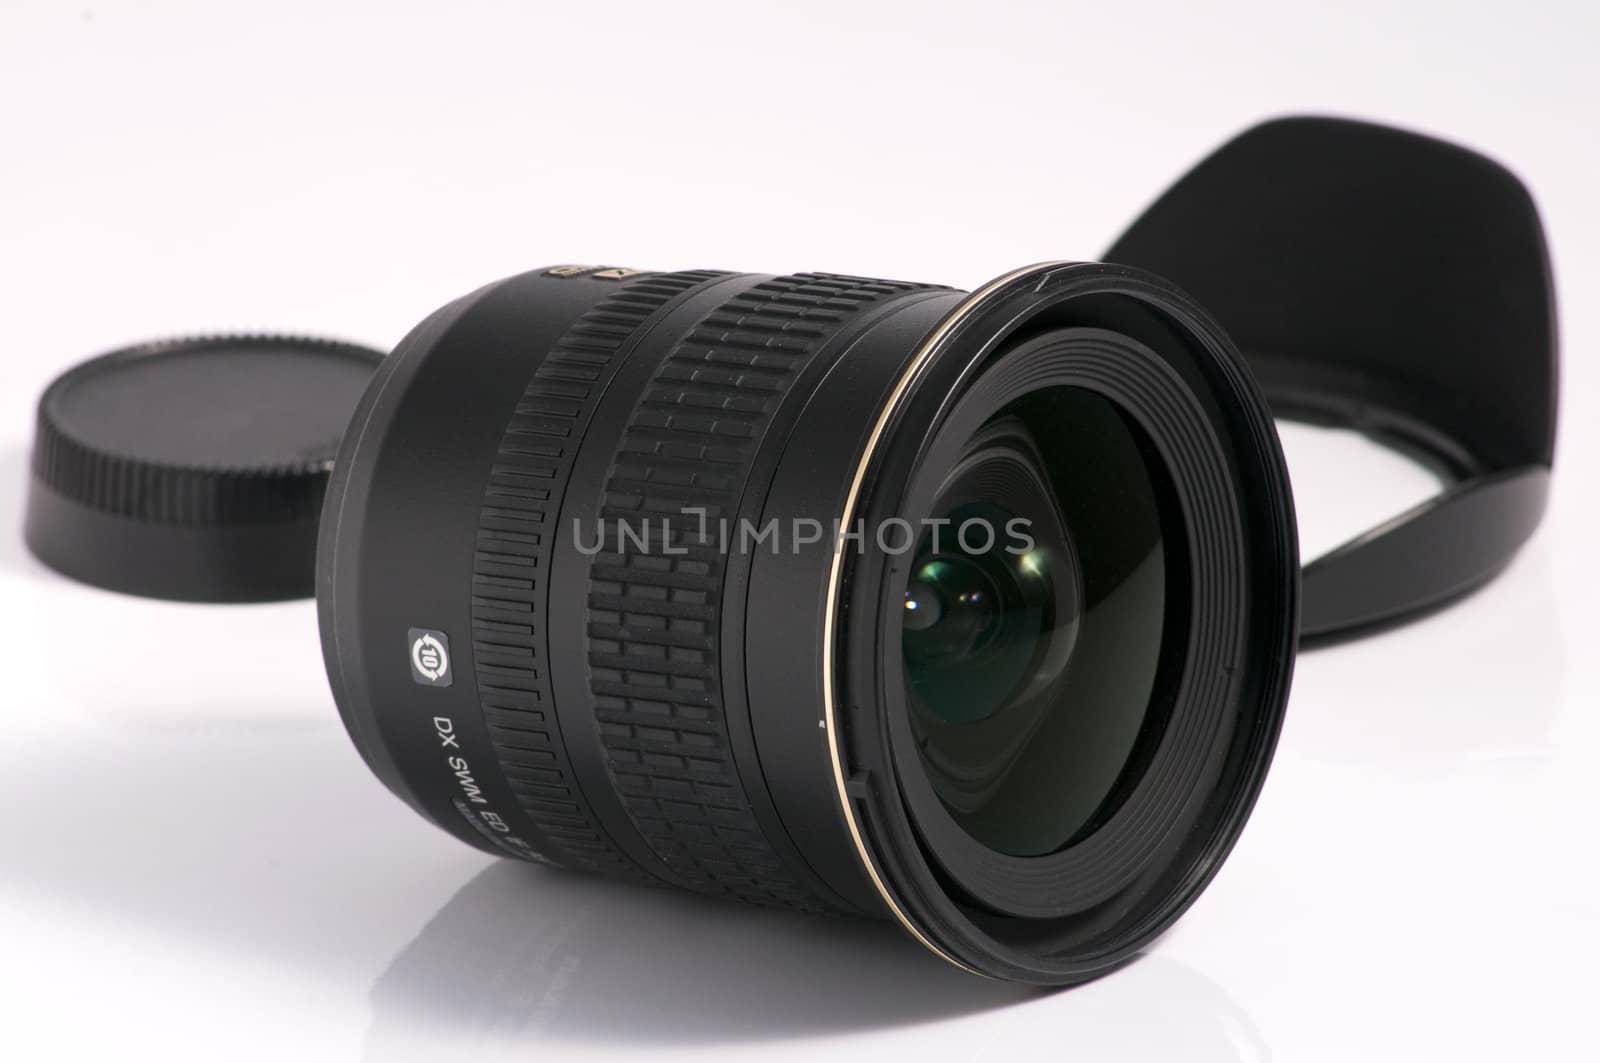 Professional lens for reflex camera - black on white background